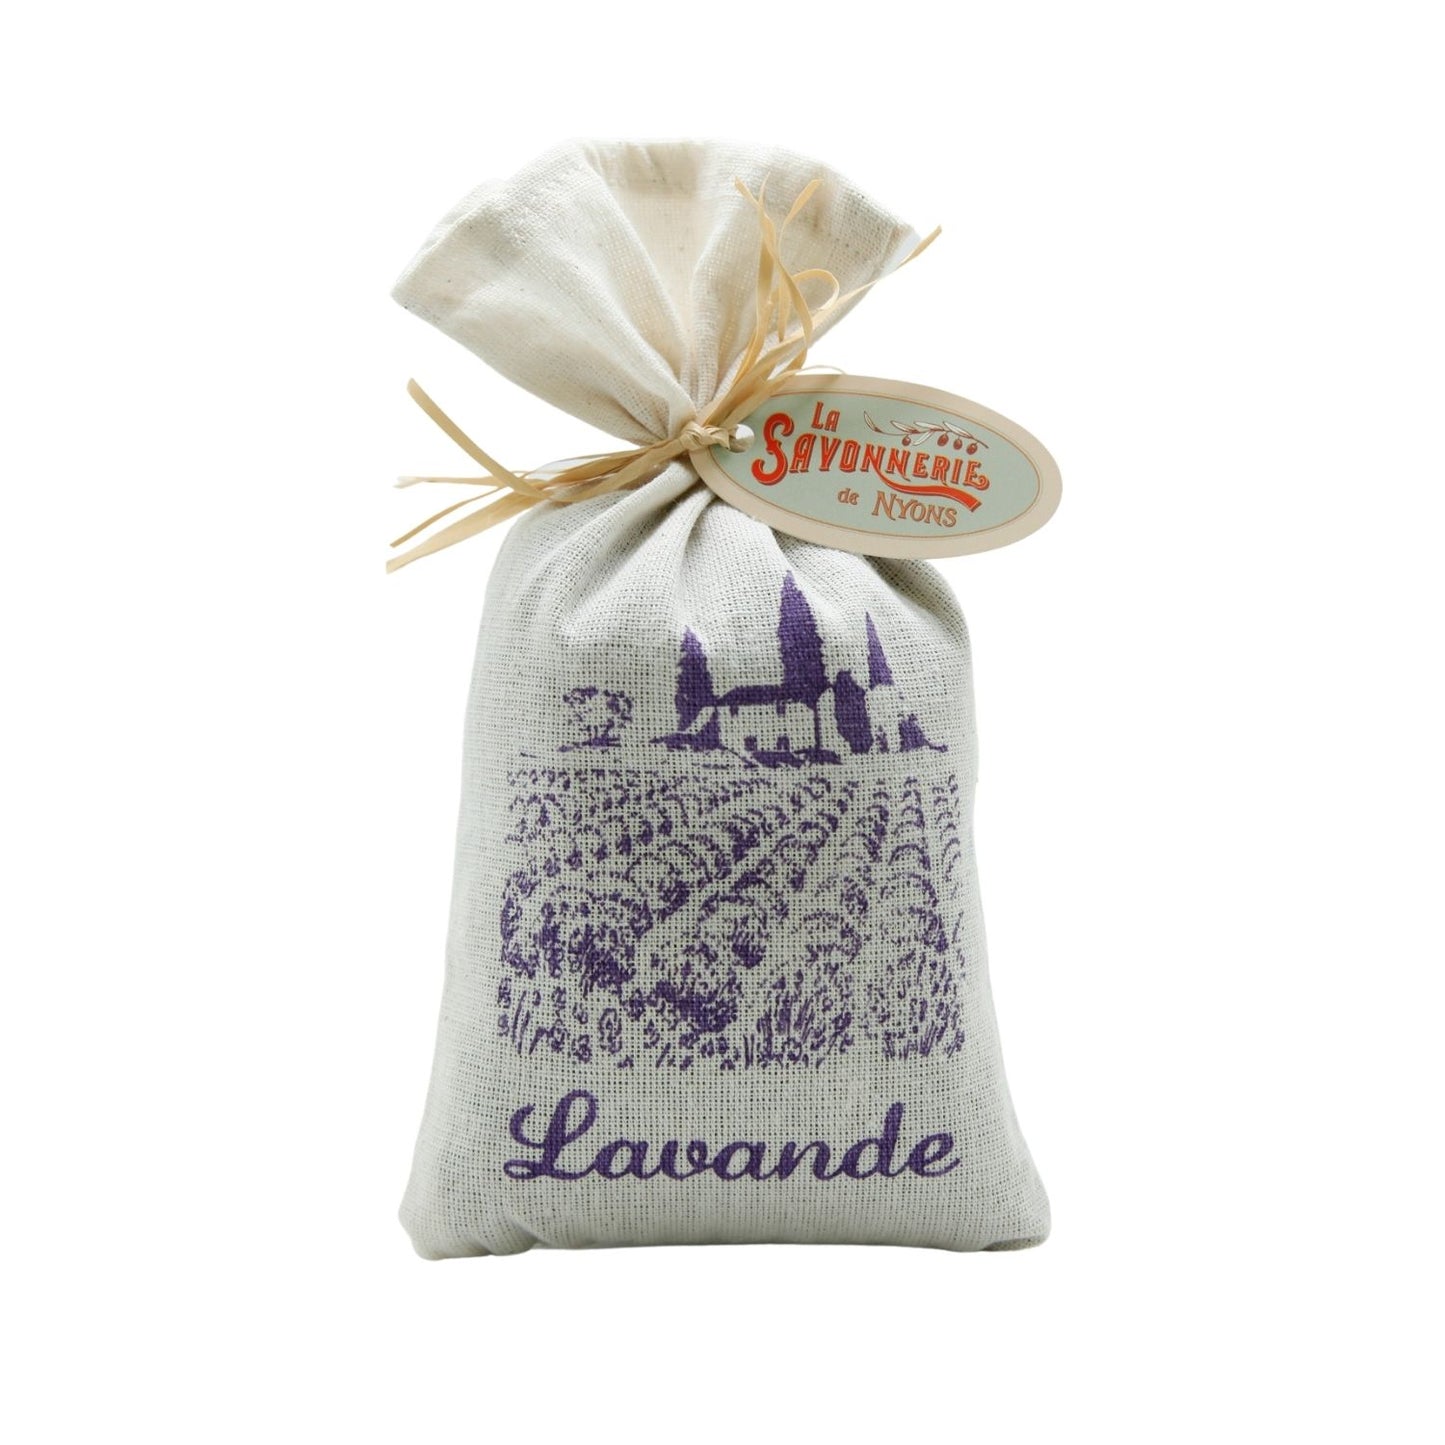 Lavender scented sachet 50g - lavender field